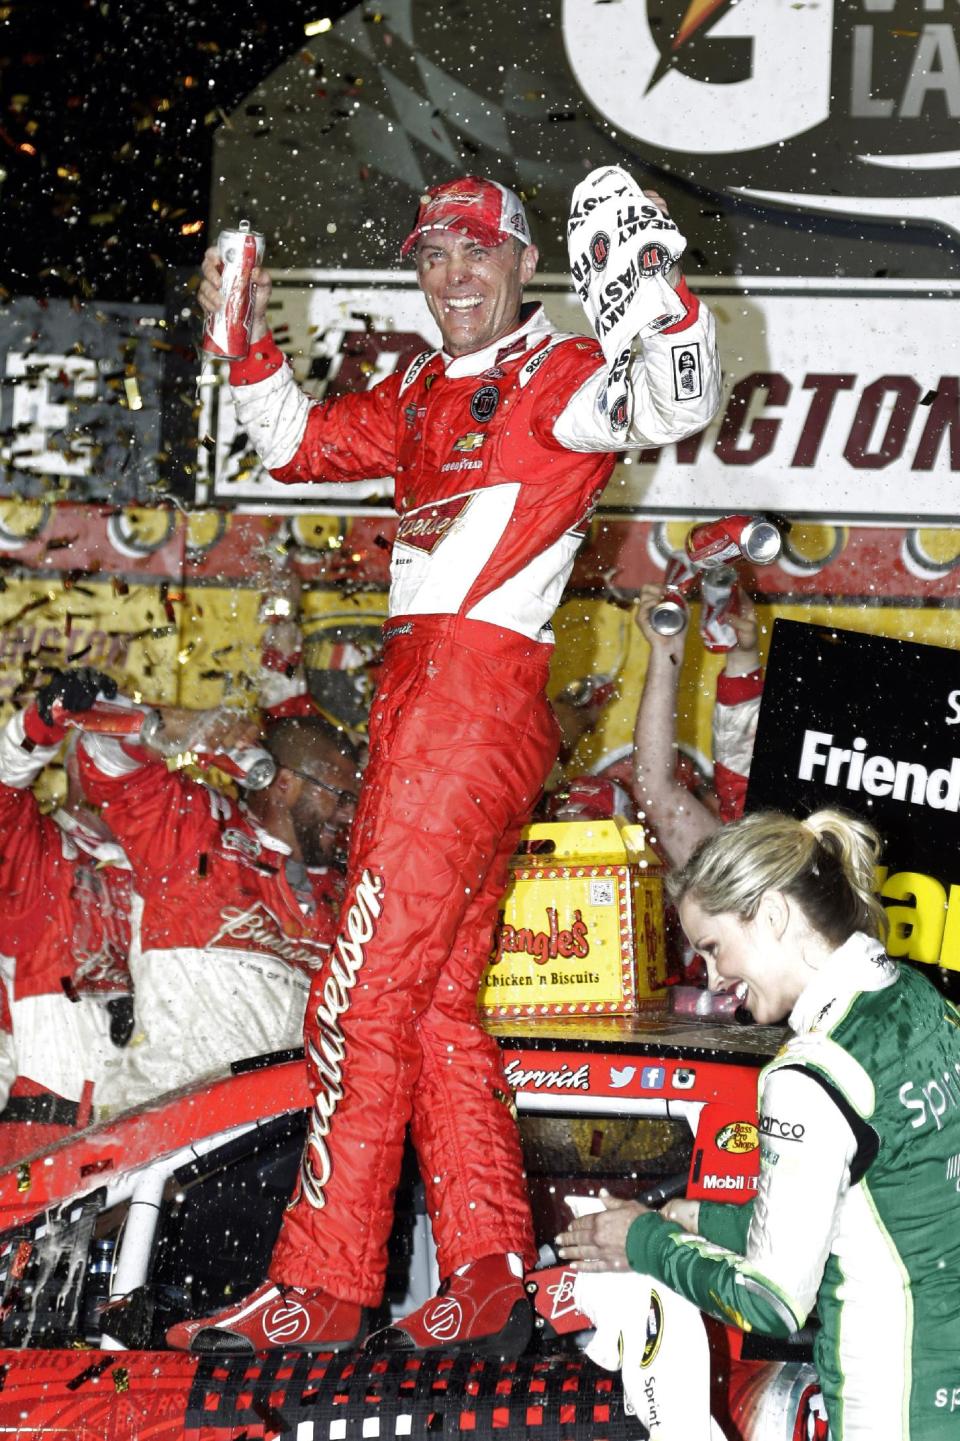 Kevin Harvick celebrates in Victory Lane after winning the NASCAR Sprint Cup auto race at Darlington Raceway in Darlington, S.C., Saturday, April 12, 2014. (AP Photo/Chuck Burton)